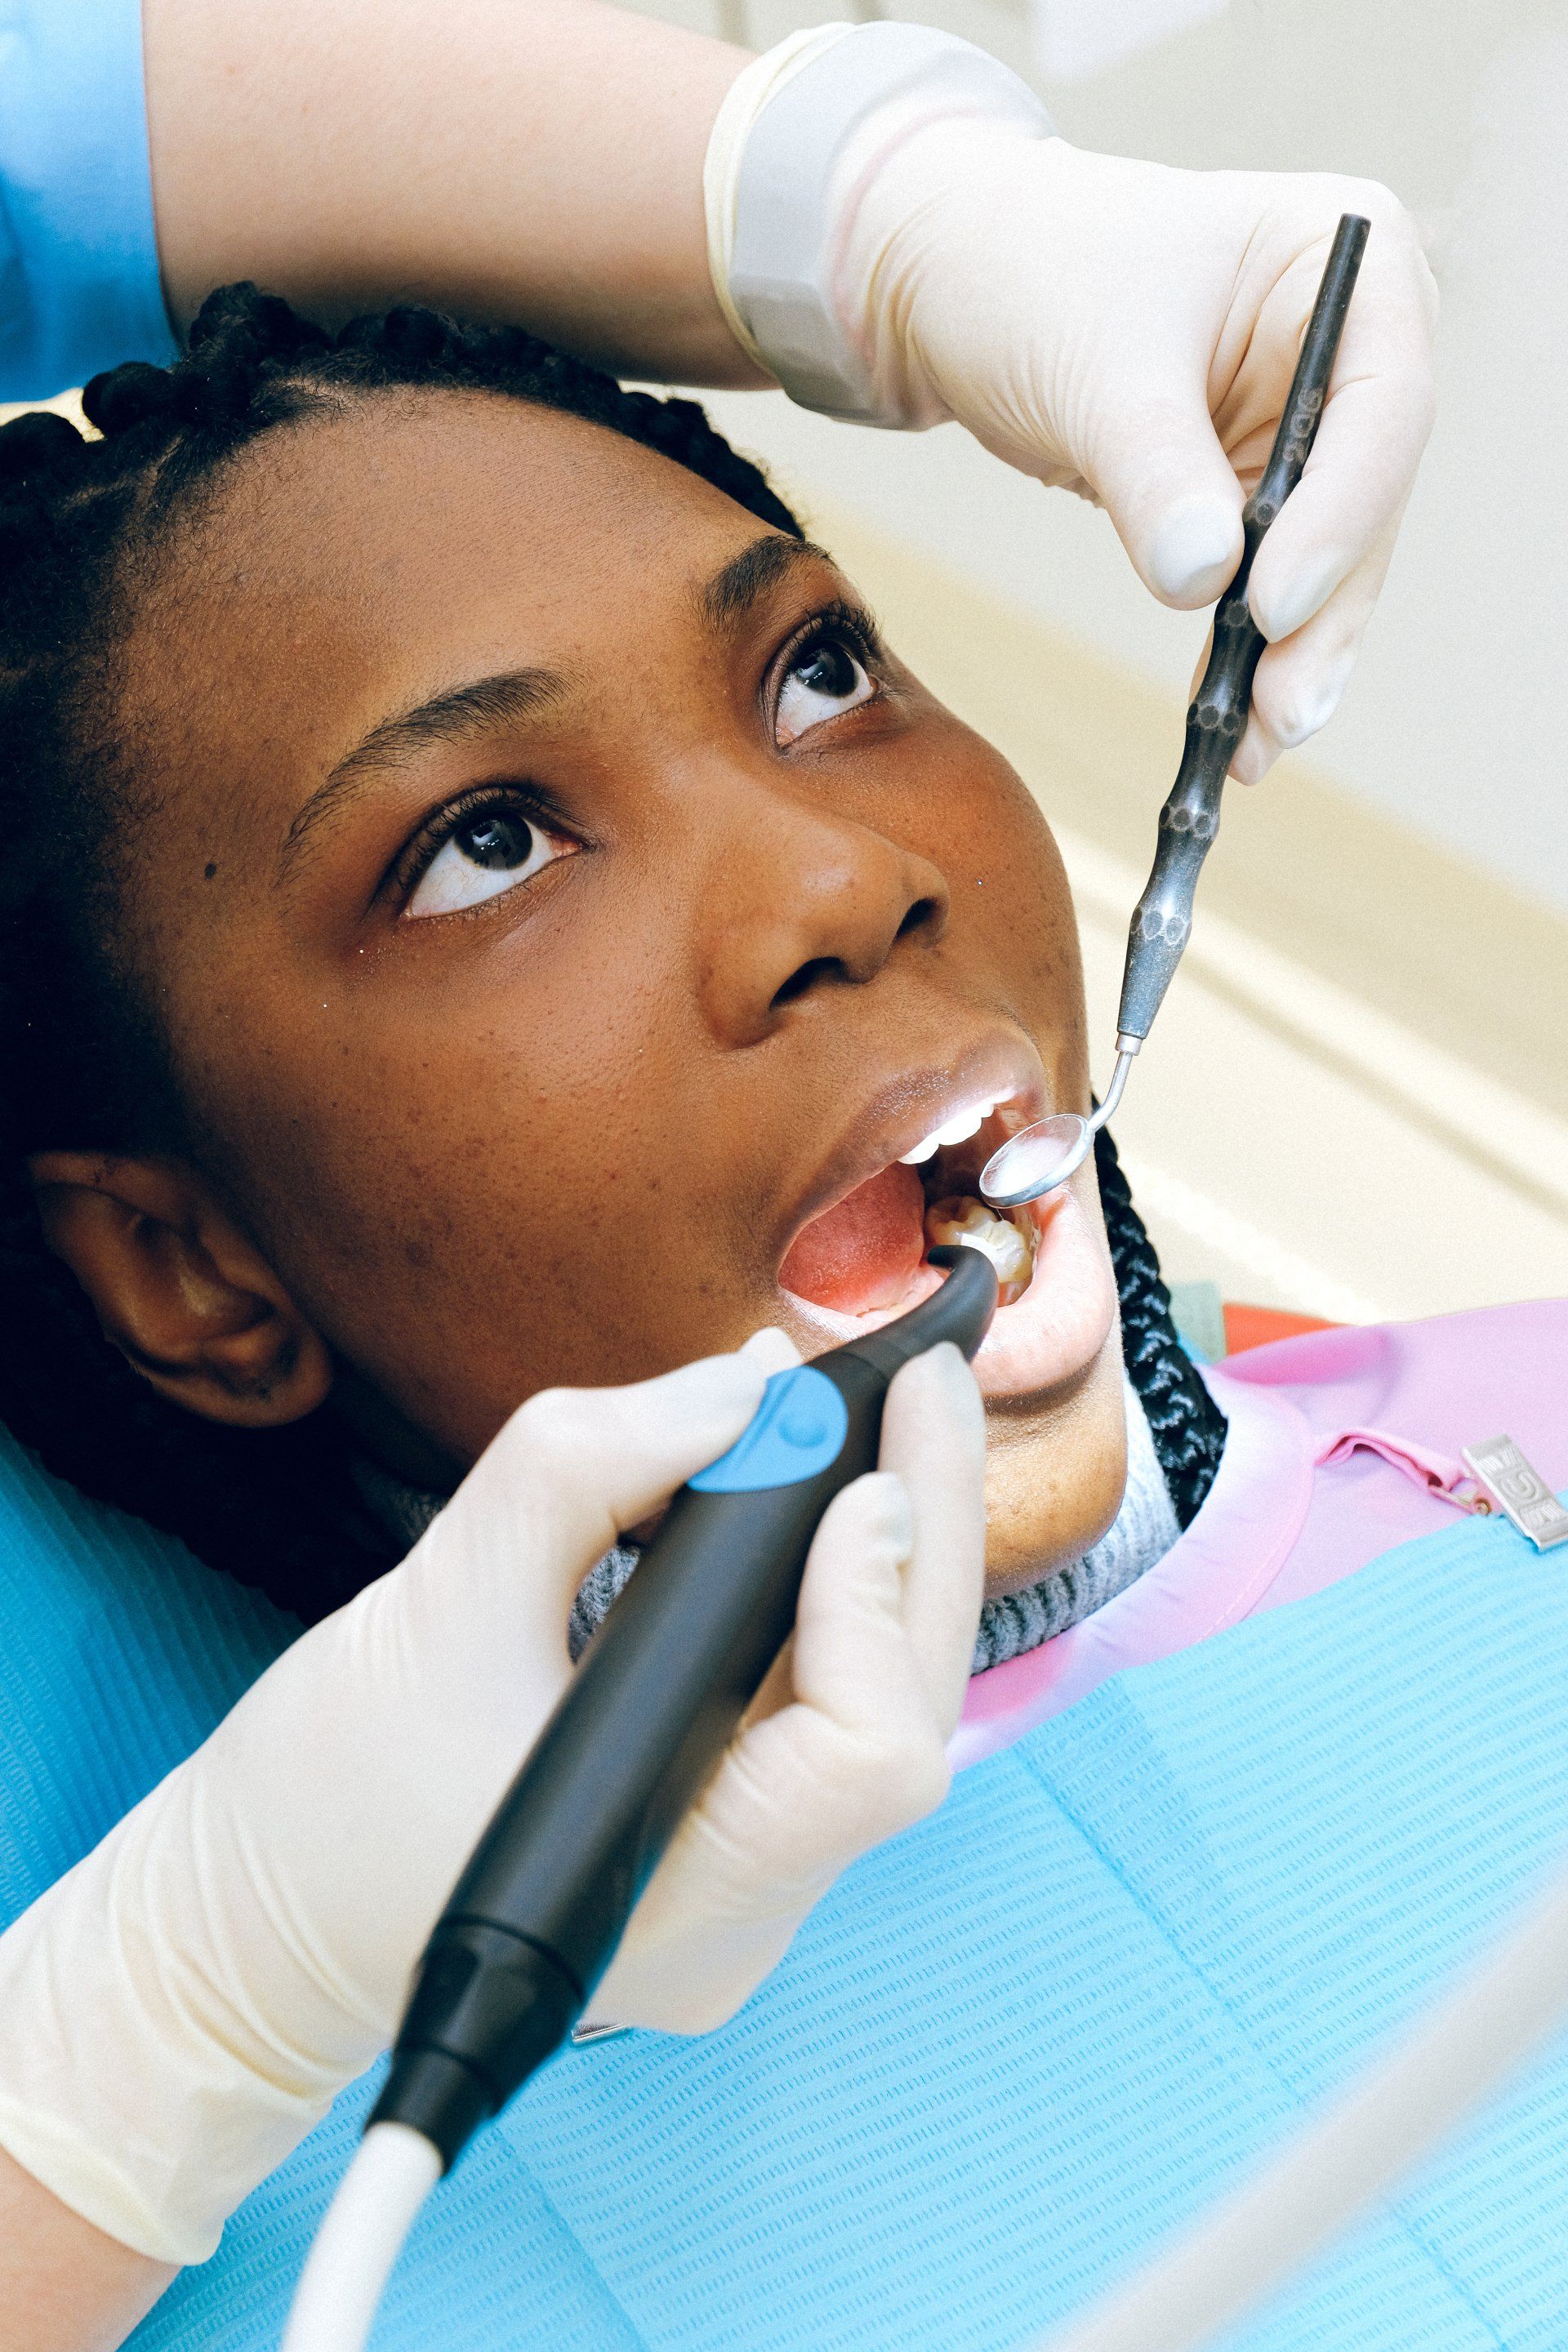 Patient getting dental sealant treatment image